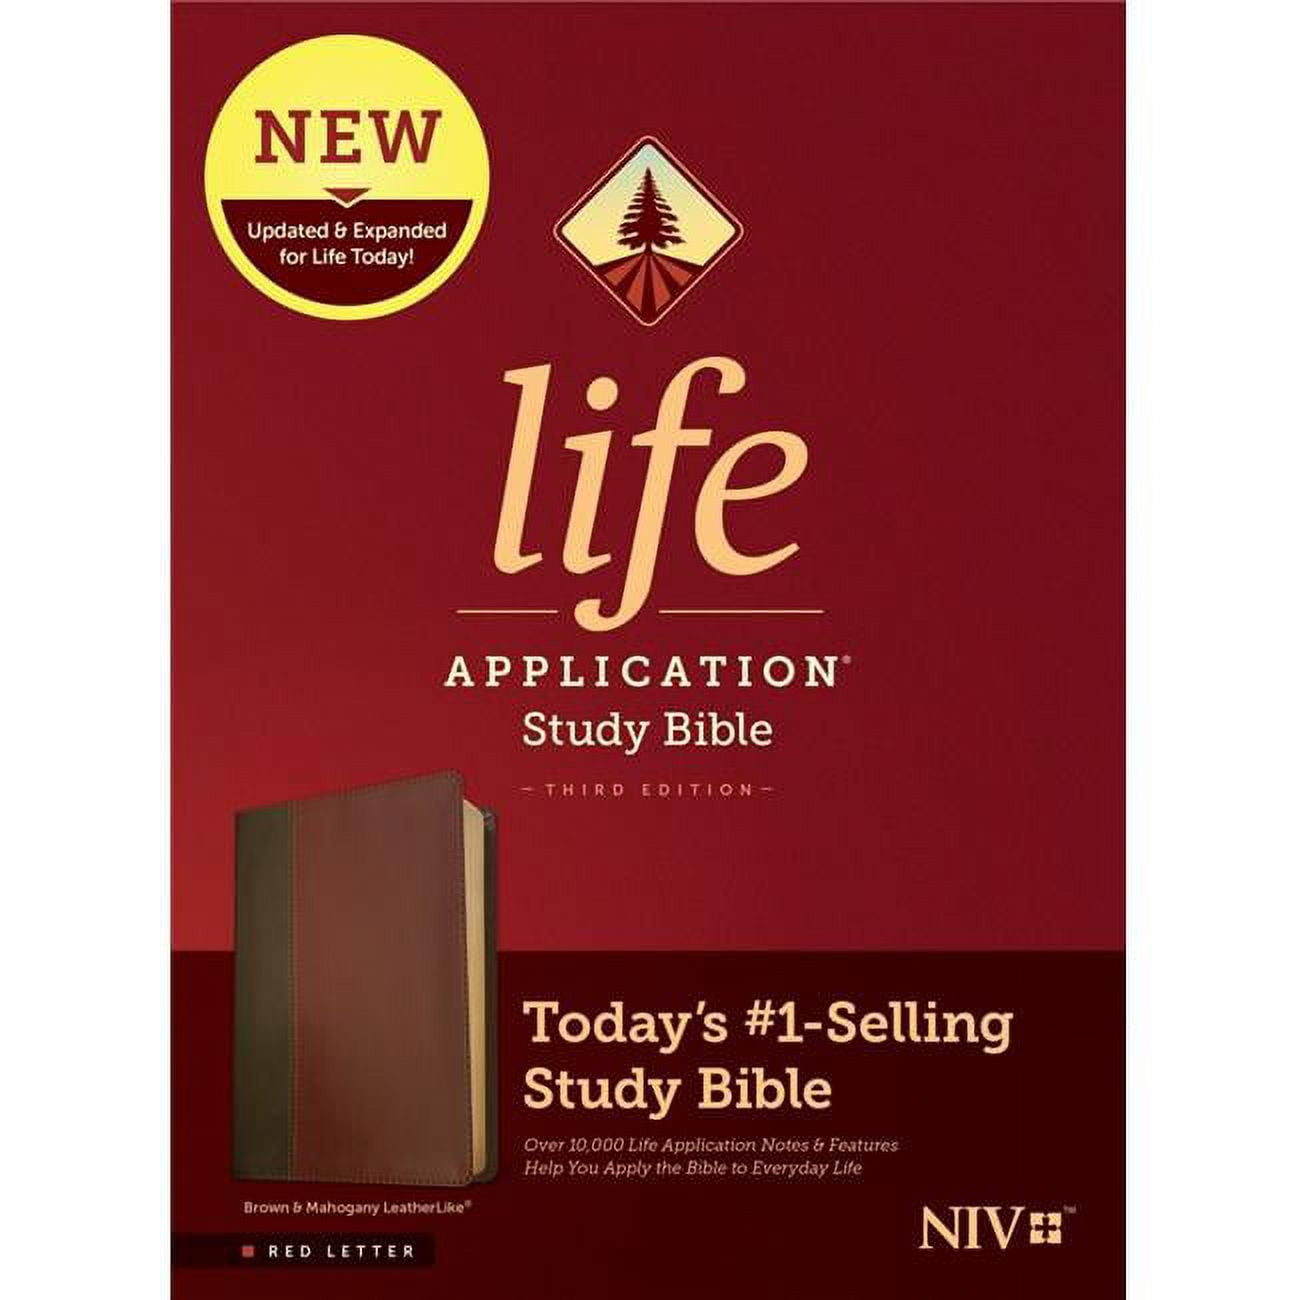 272615 NIV Life Application Study Bible, Brown & Mahogany LeatherLike -  Tyndale House Publishers